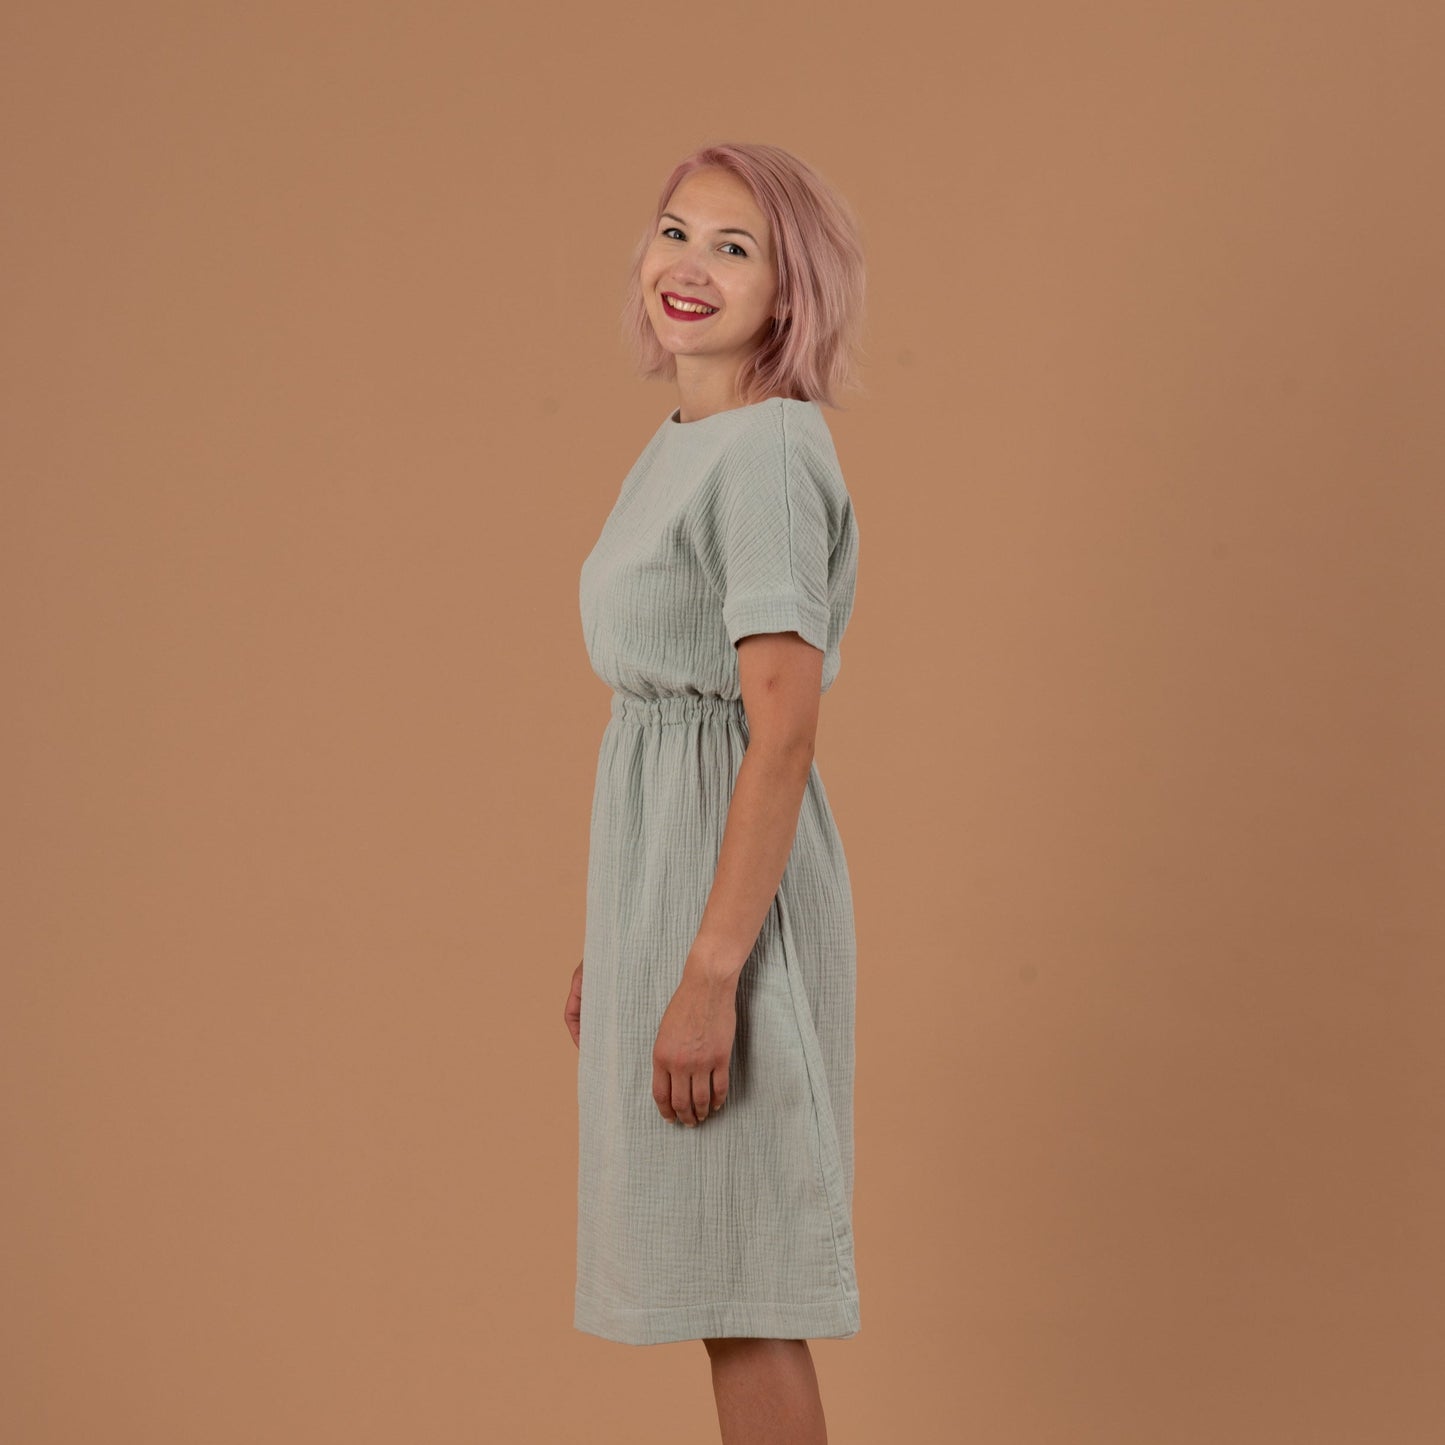 MILA Damenkleid Musselin Mint Seitenansicht links, Urheber: Mini & Eve